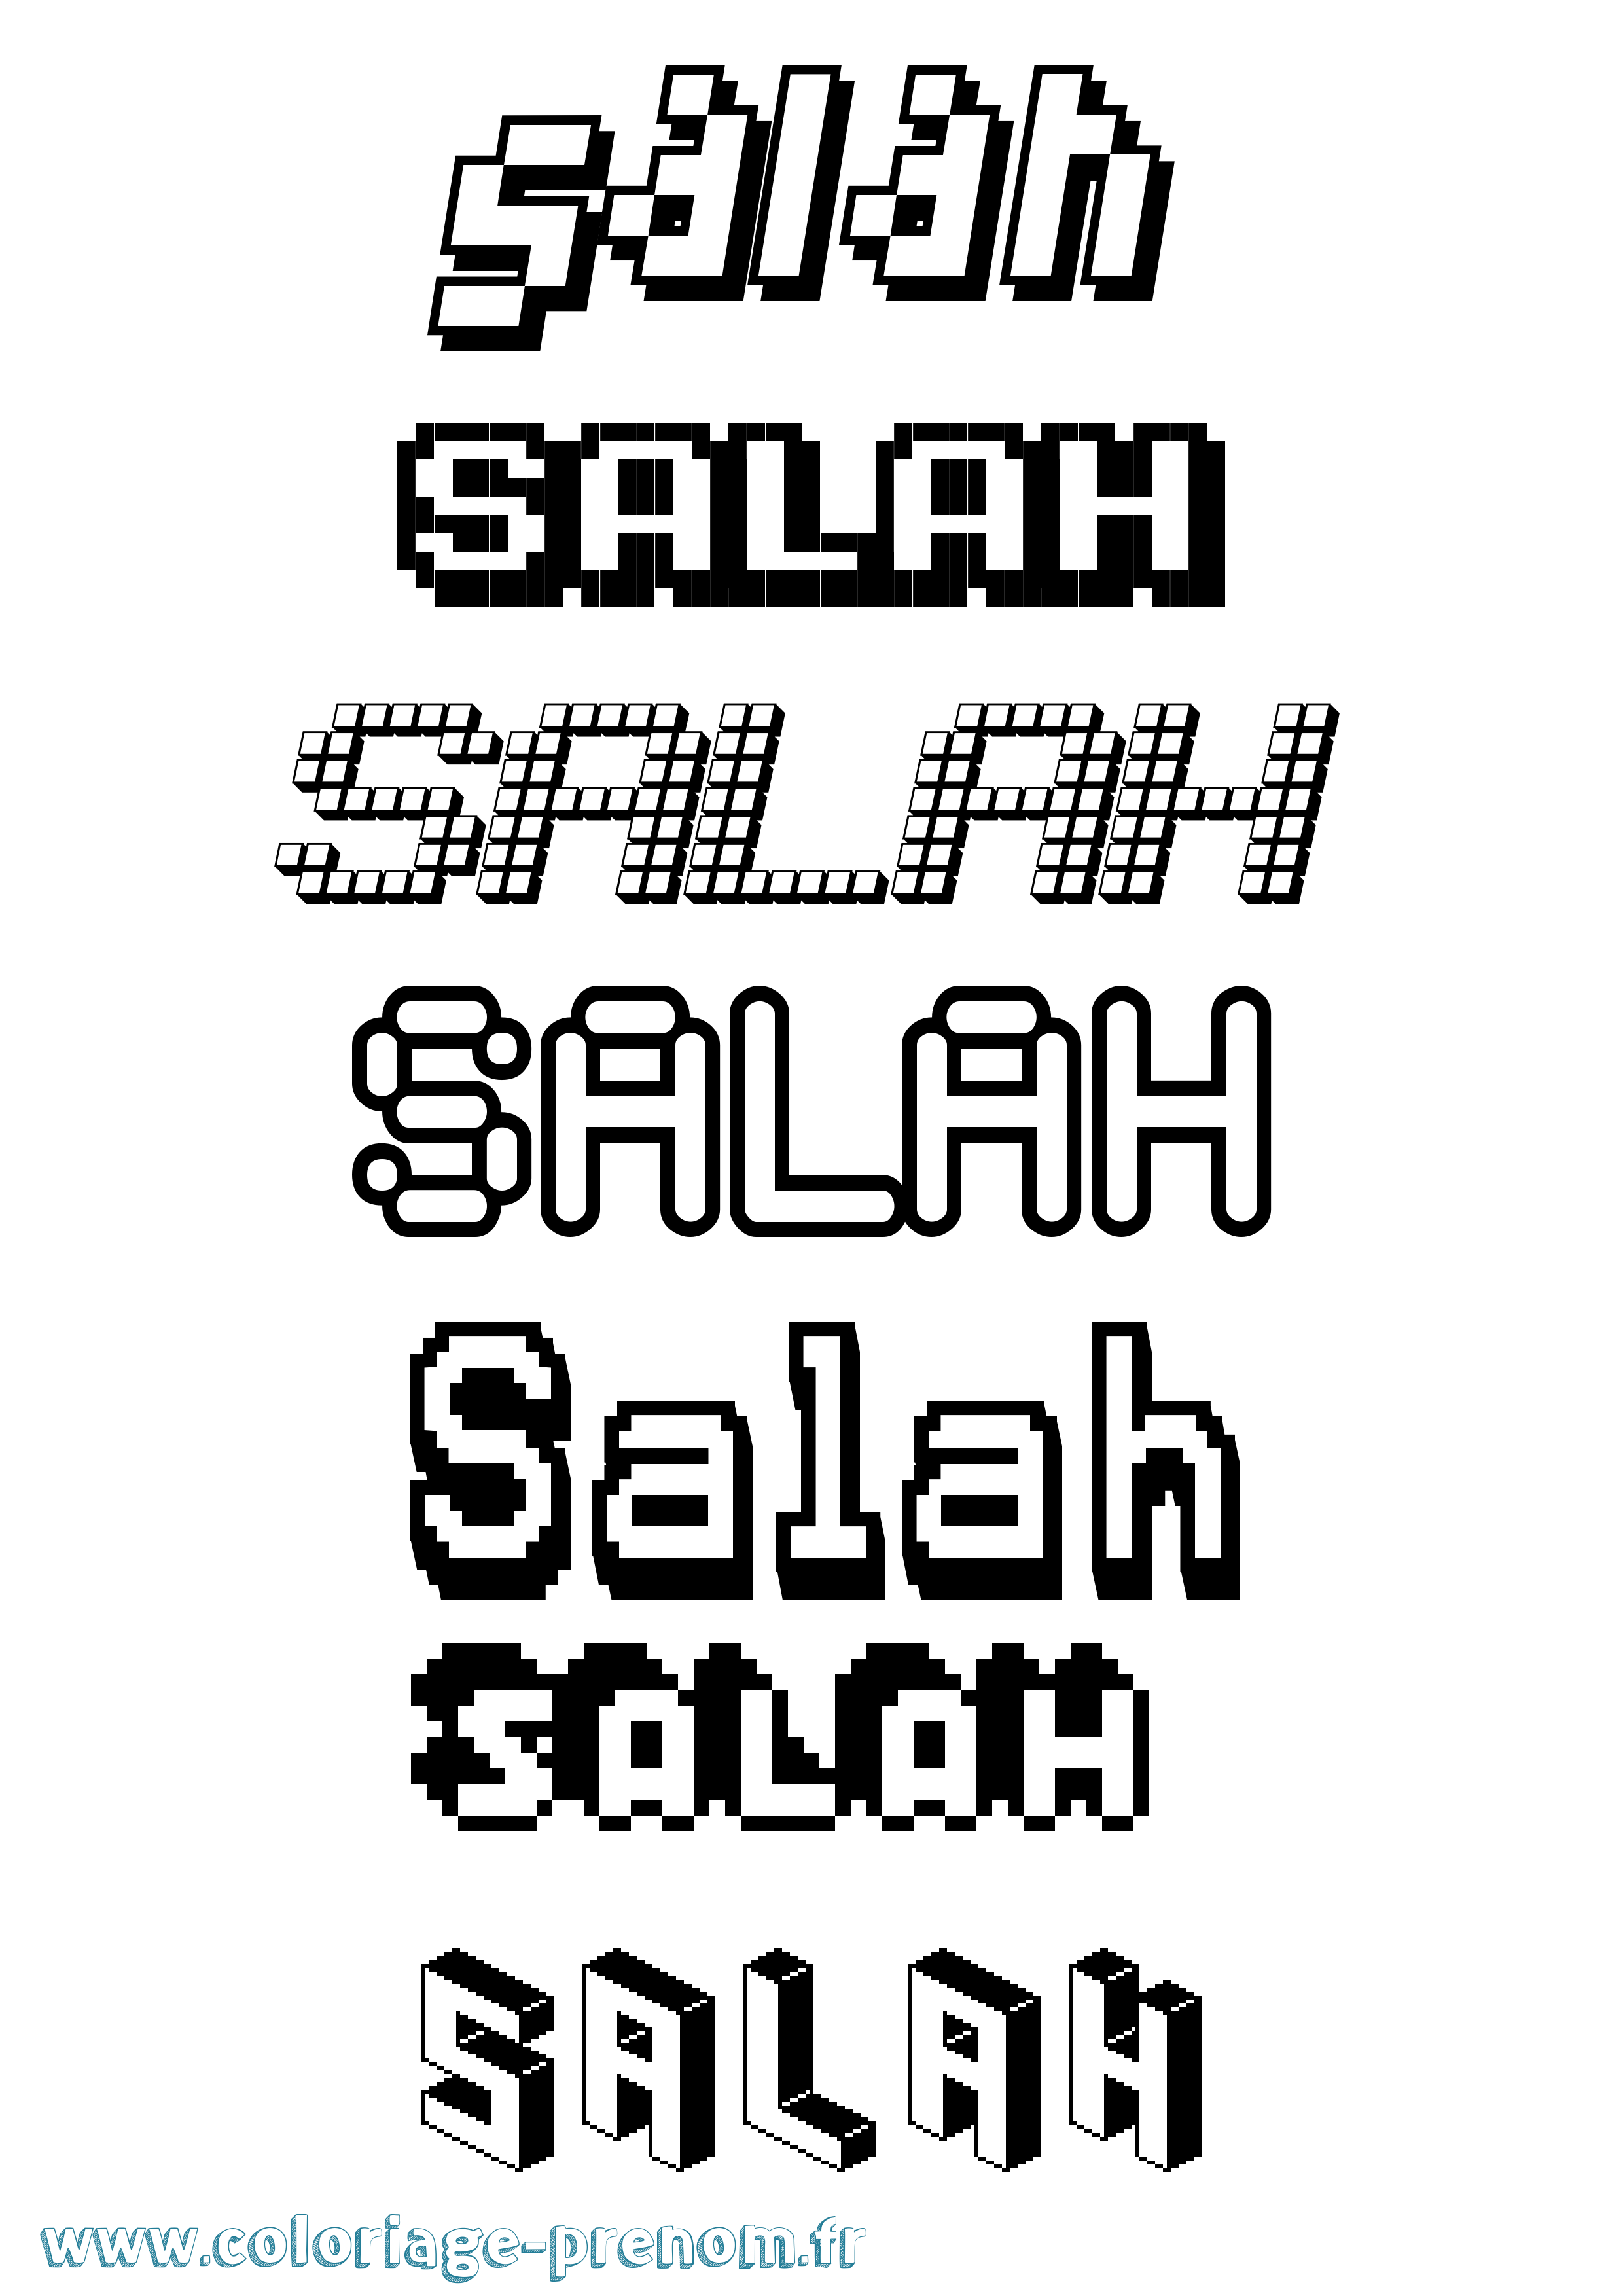 Coloriage prénom Salah Pixel